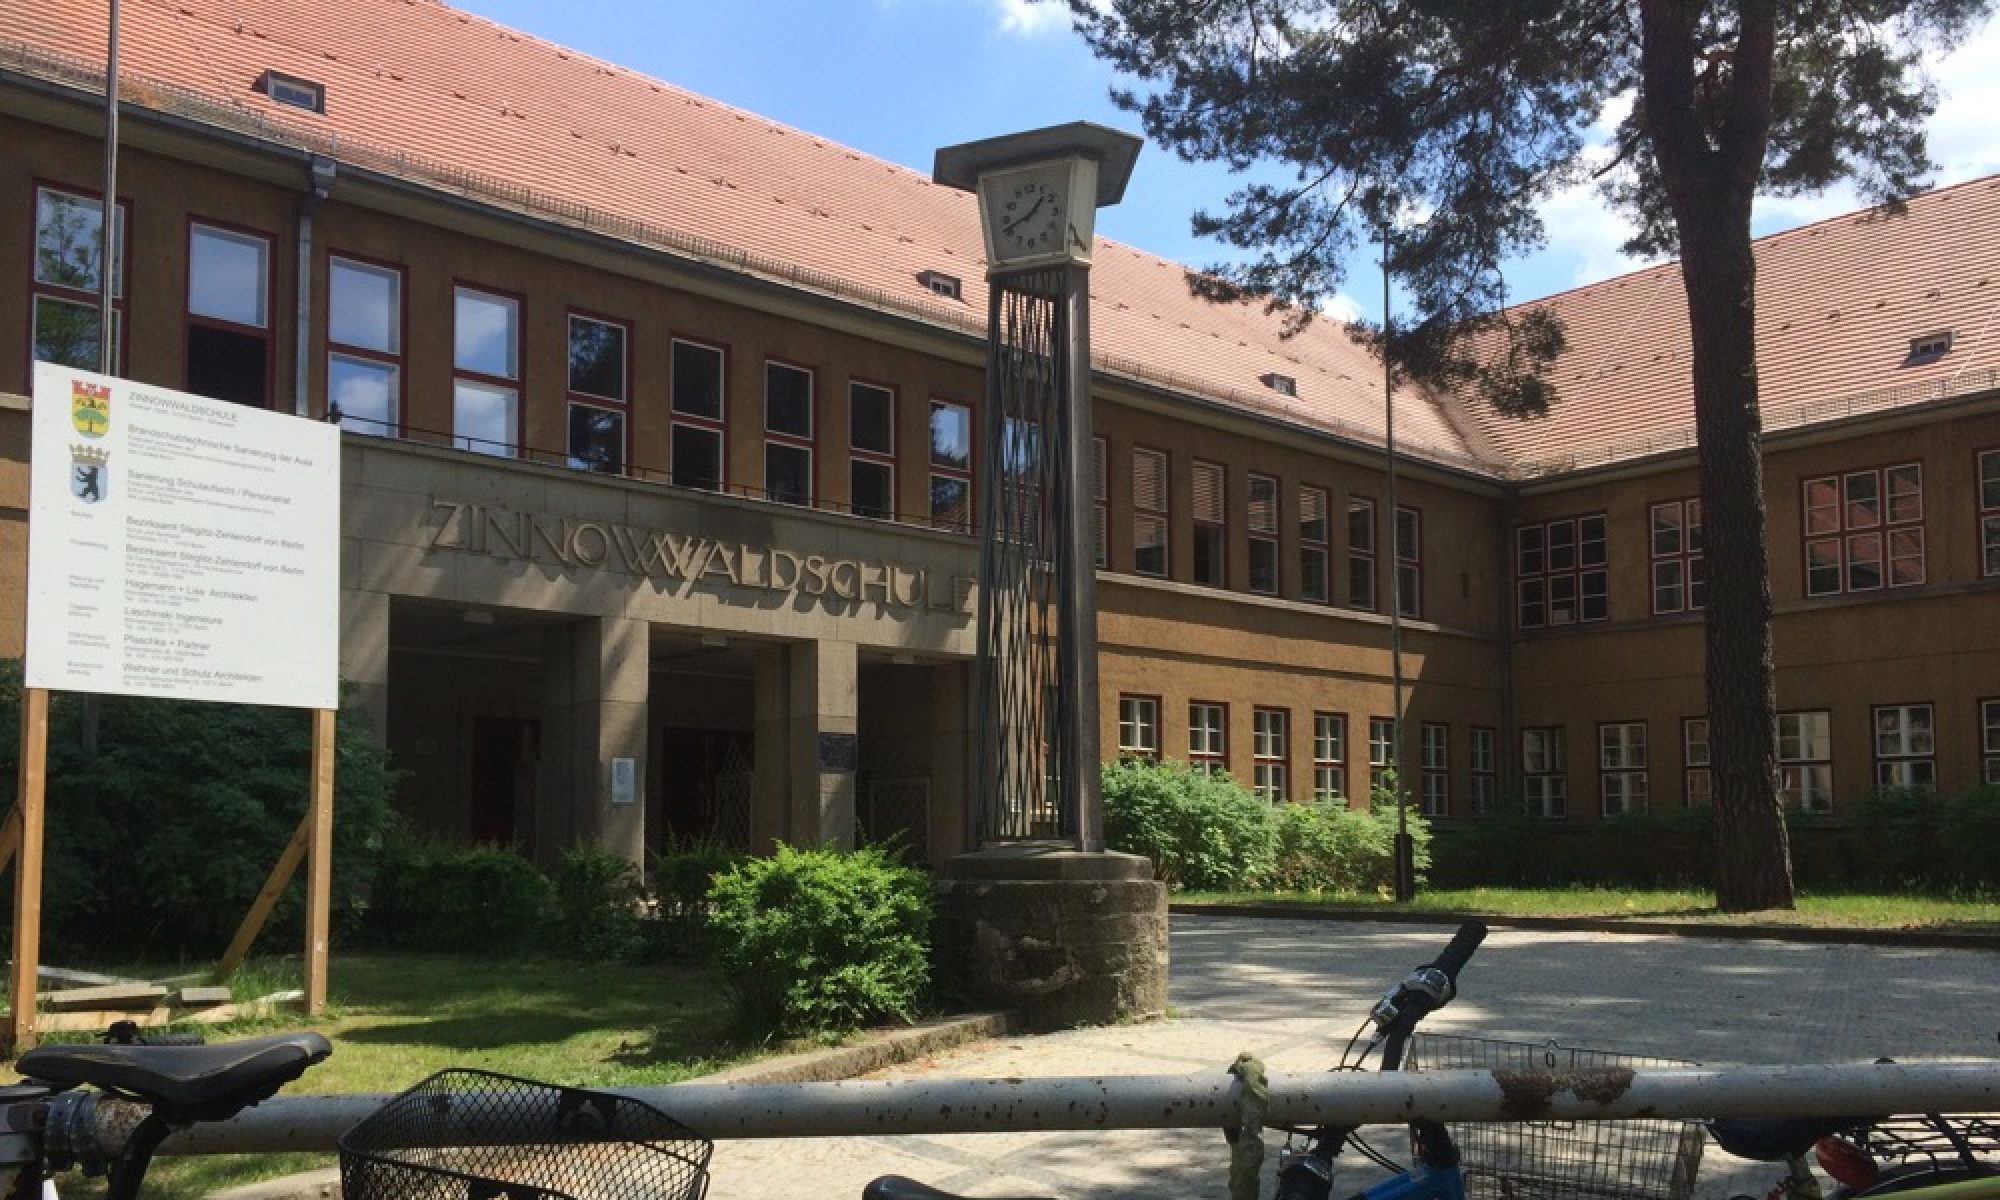 Zinnowwald Grundschule